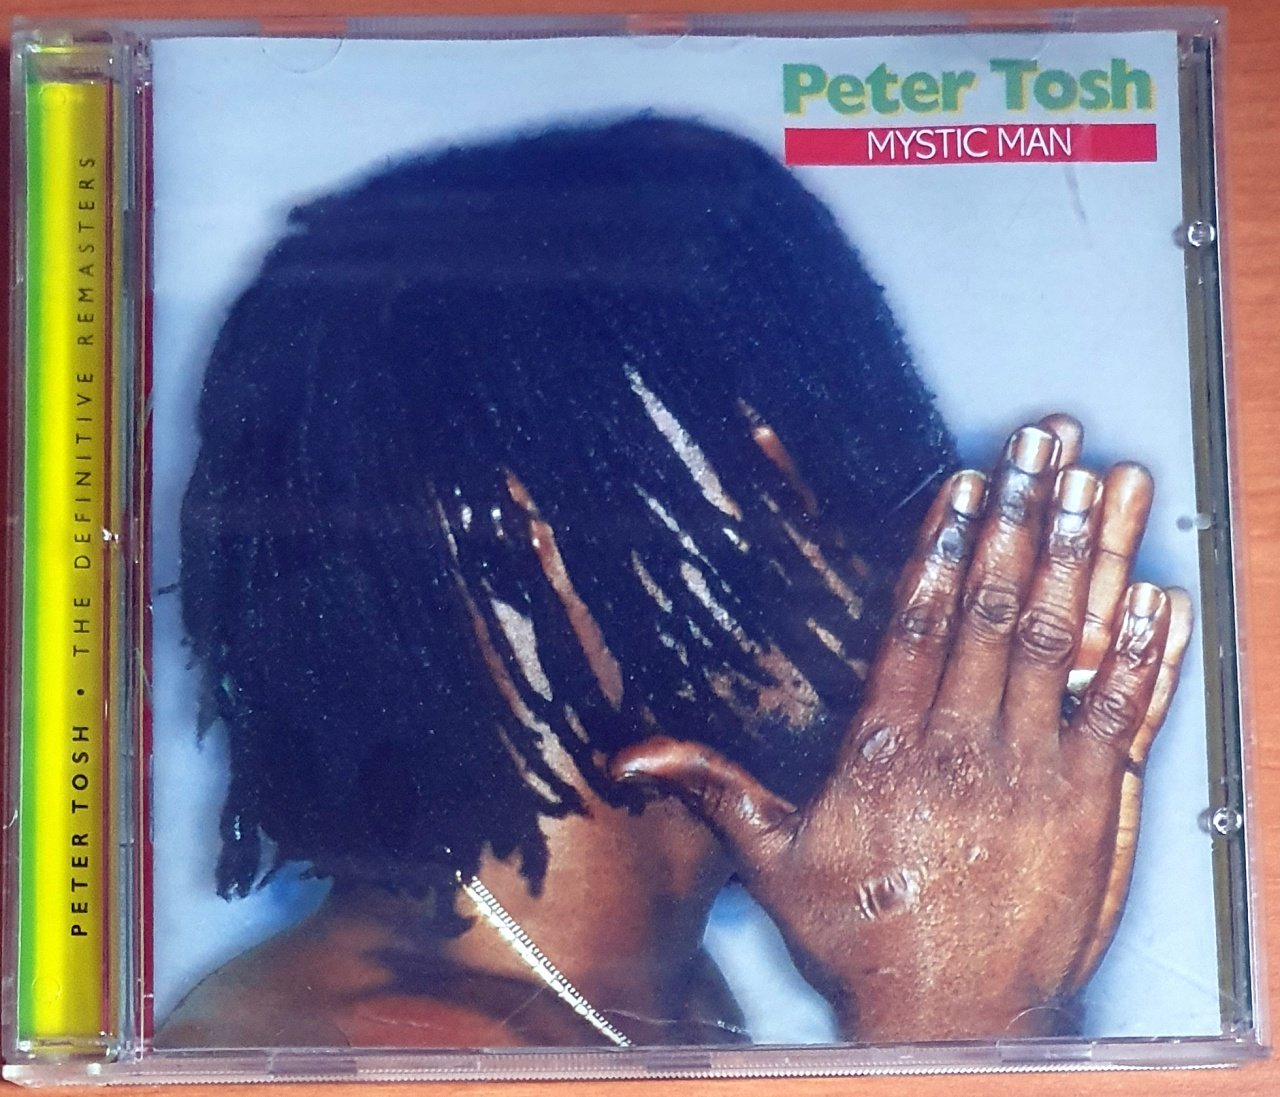 PETER TOSH - MYSTIC MAN (1979) - CD 2002 REMASTERED REISSUE 2.EL